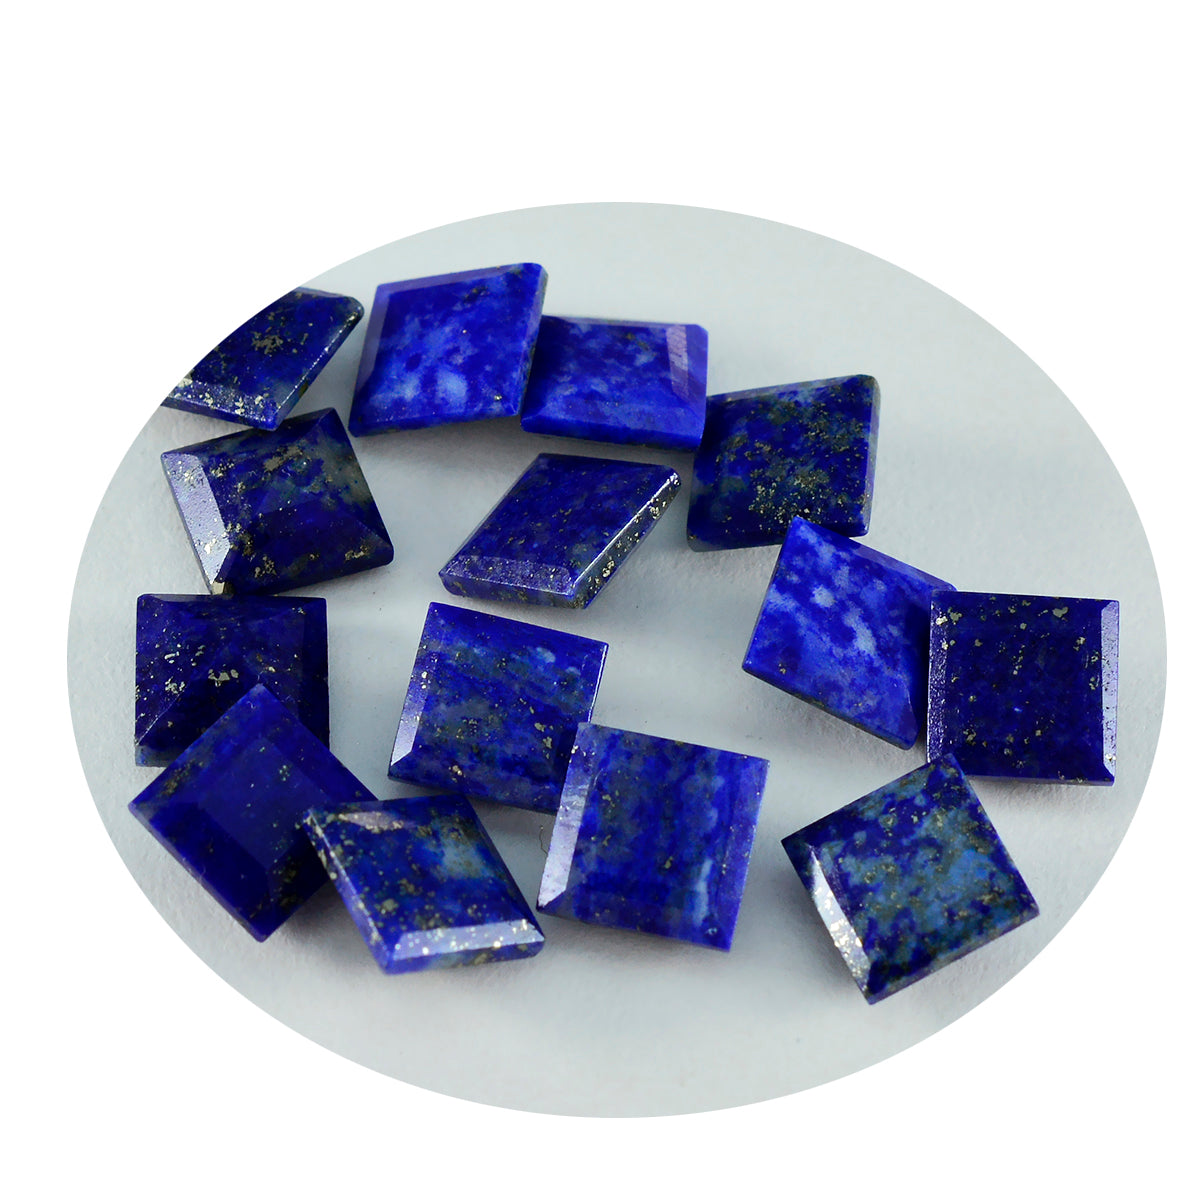 Riyogems 1PC Natural Blue Lapis Lazuli Faceted 8x8 mm Square Shape pretty Quality Stone